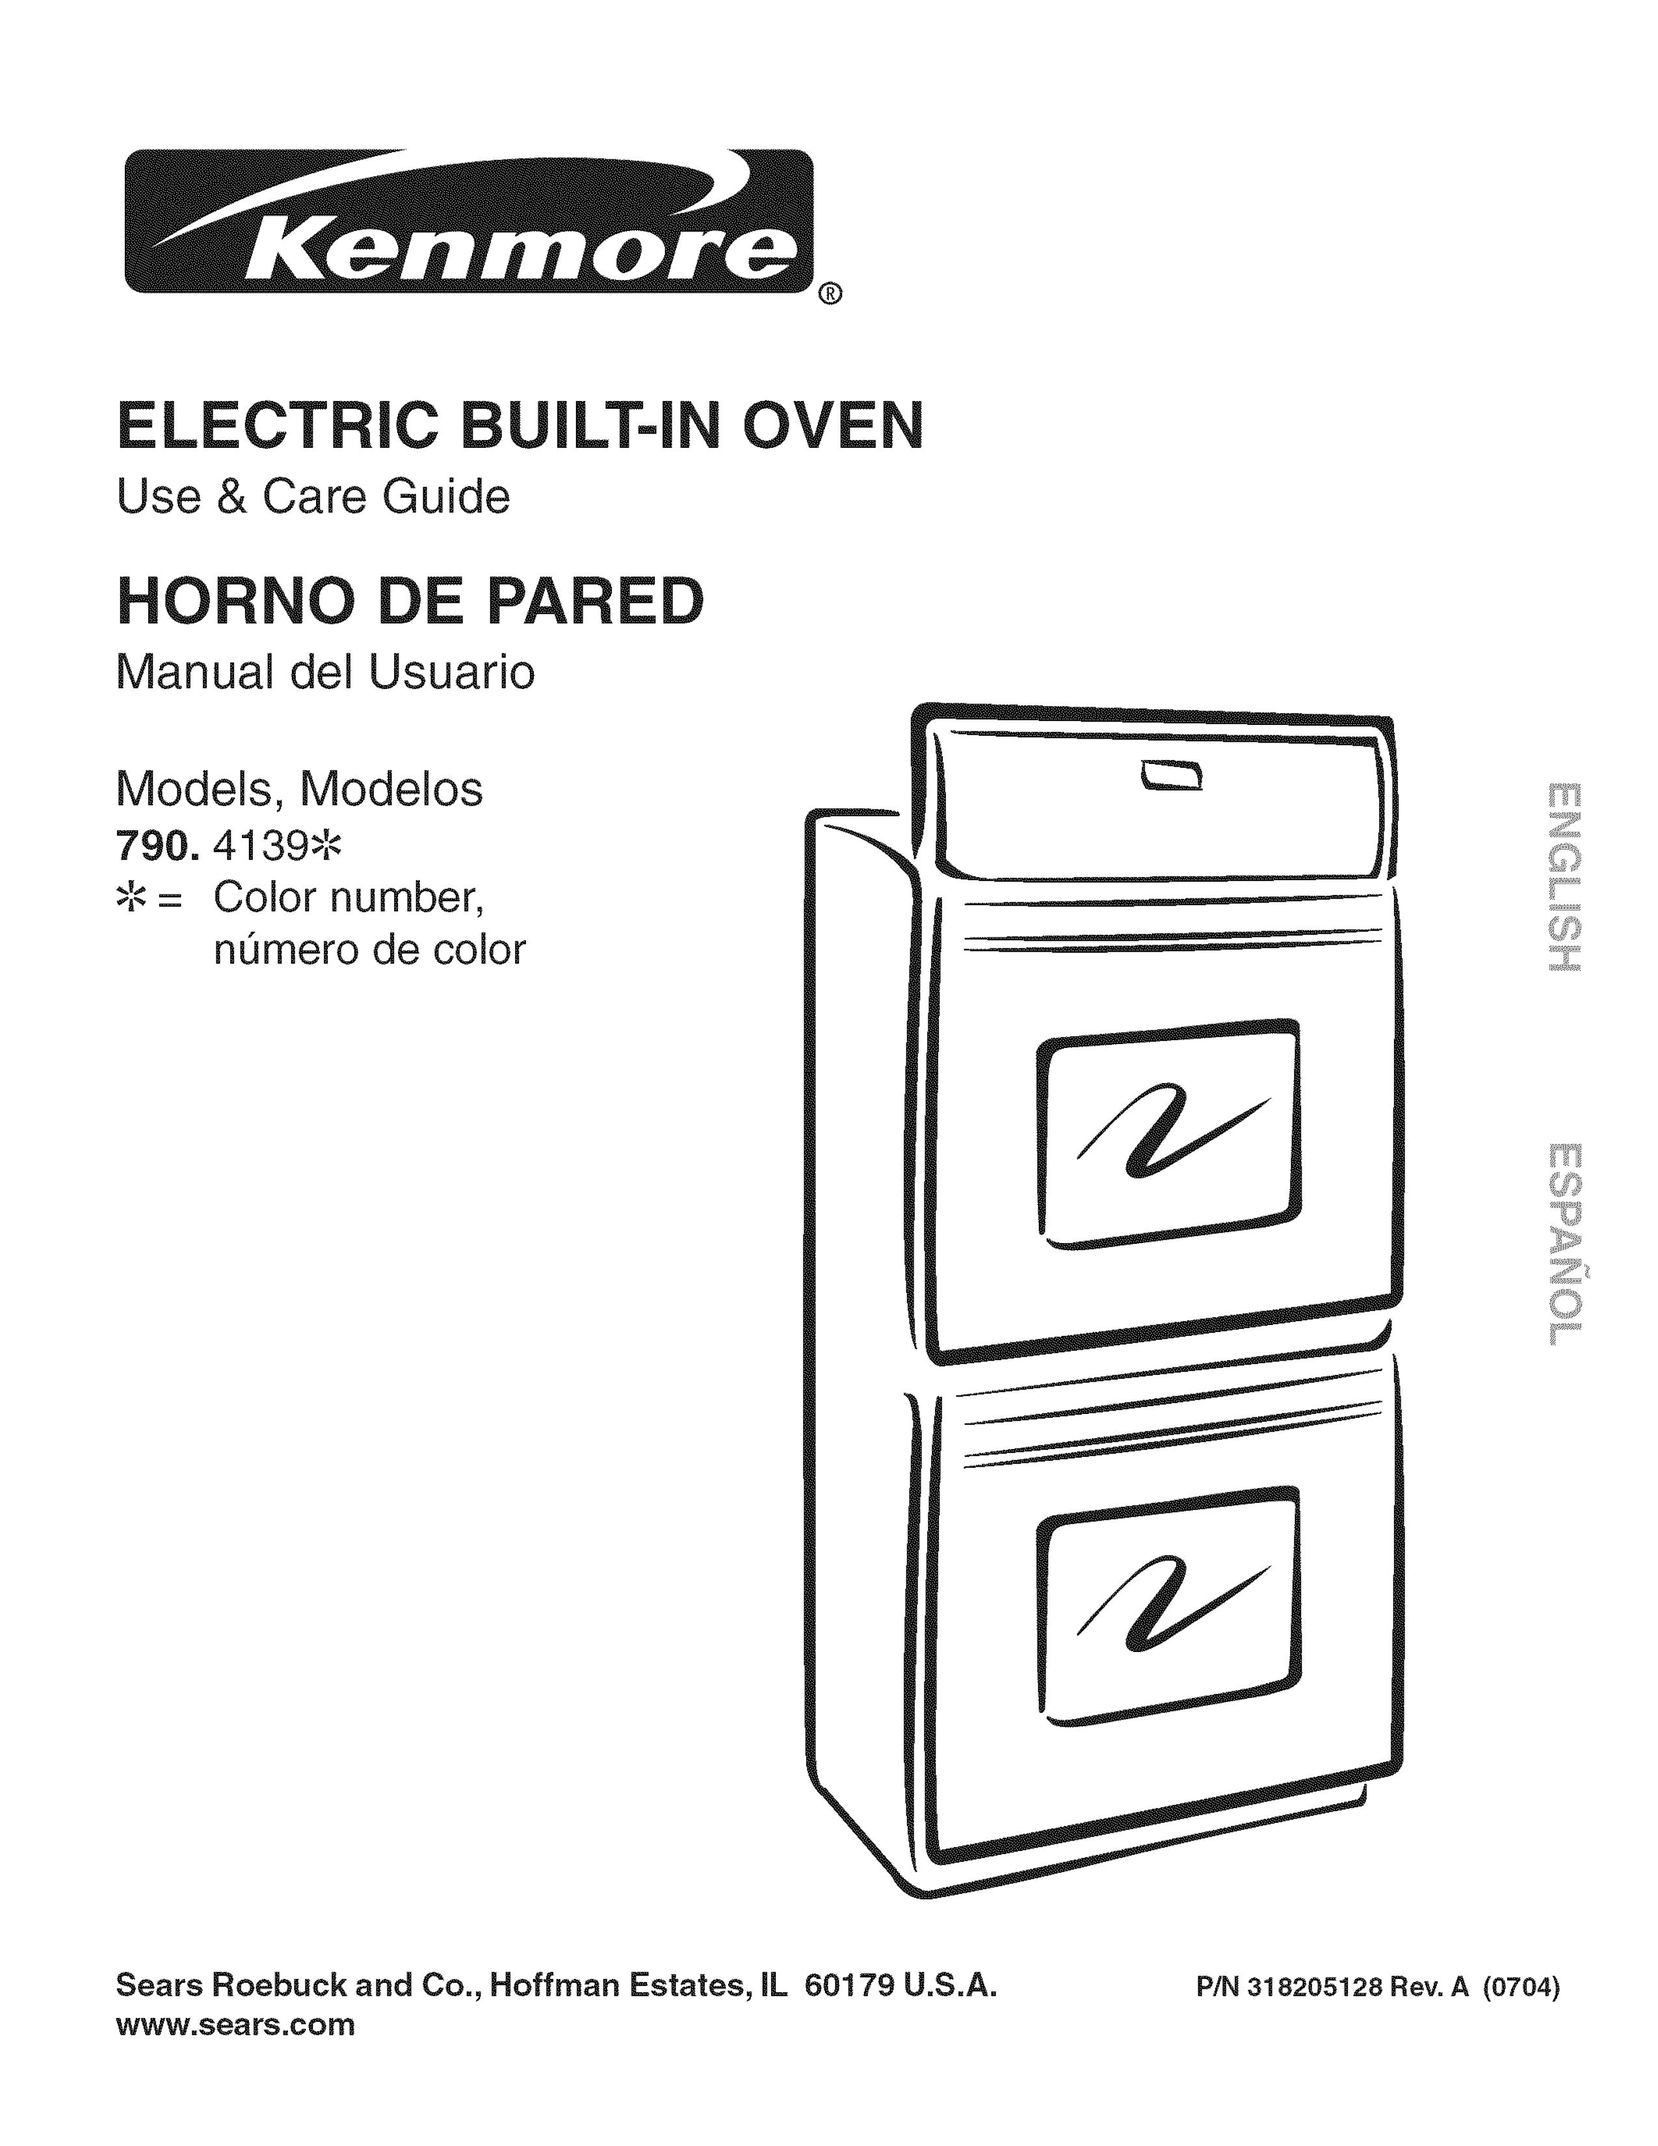 Kenmore 790.4139 Oven User Manual